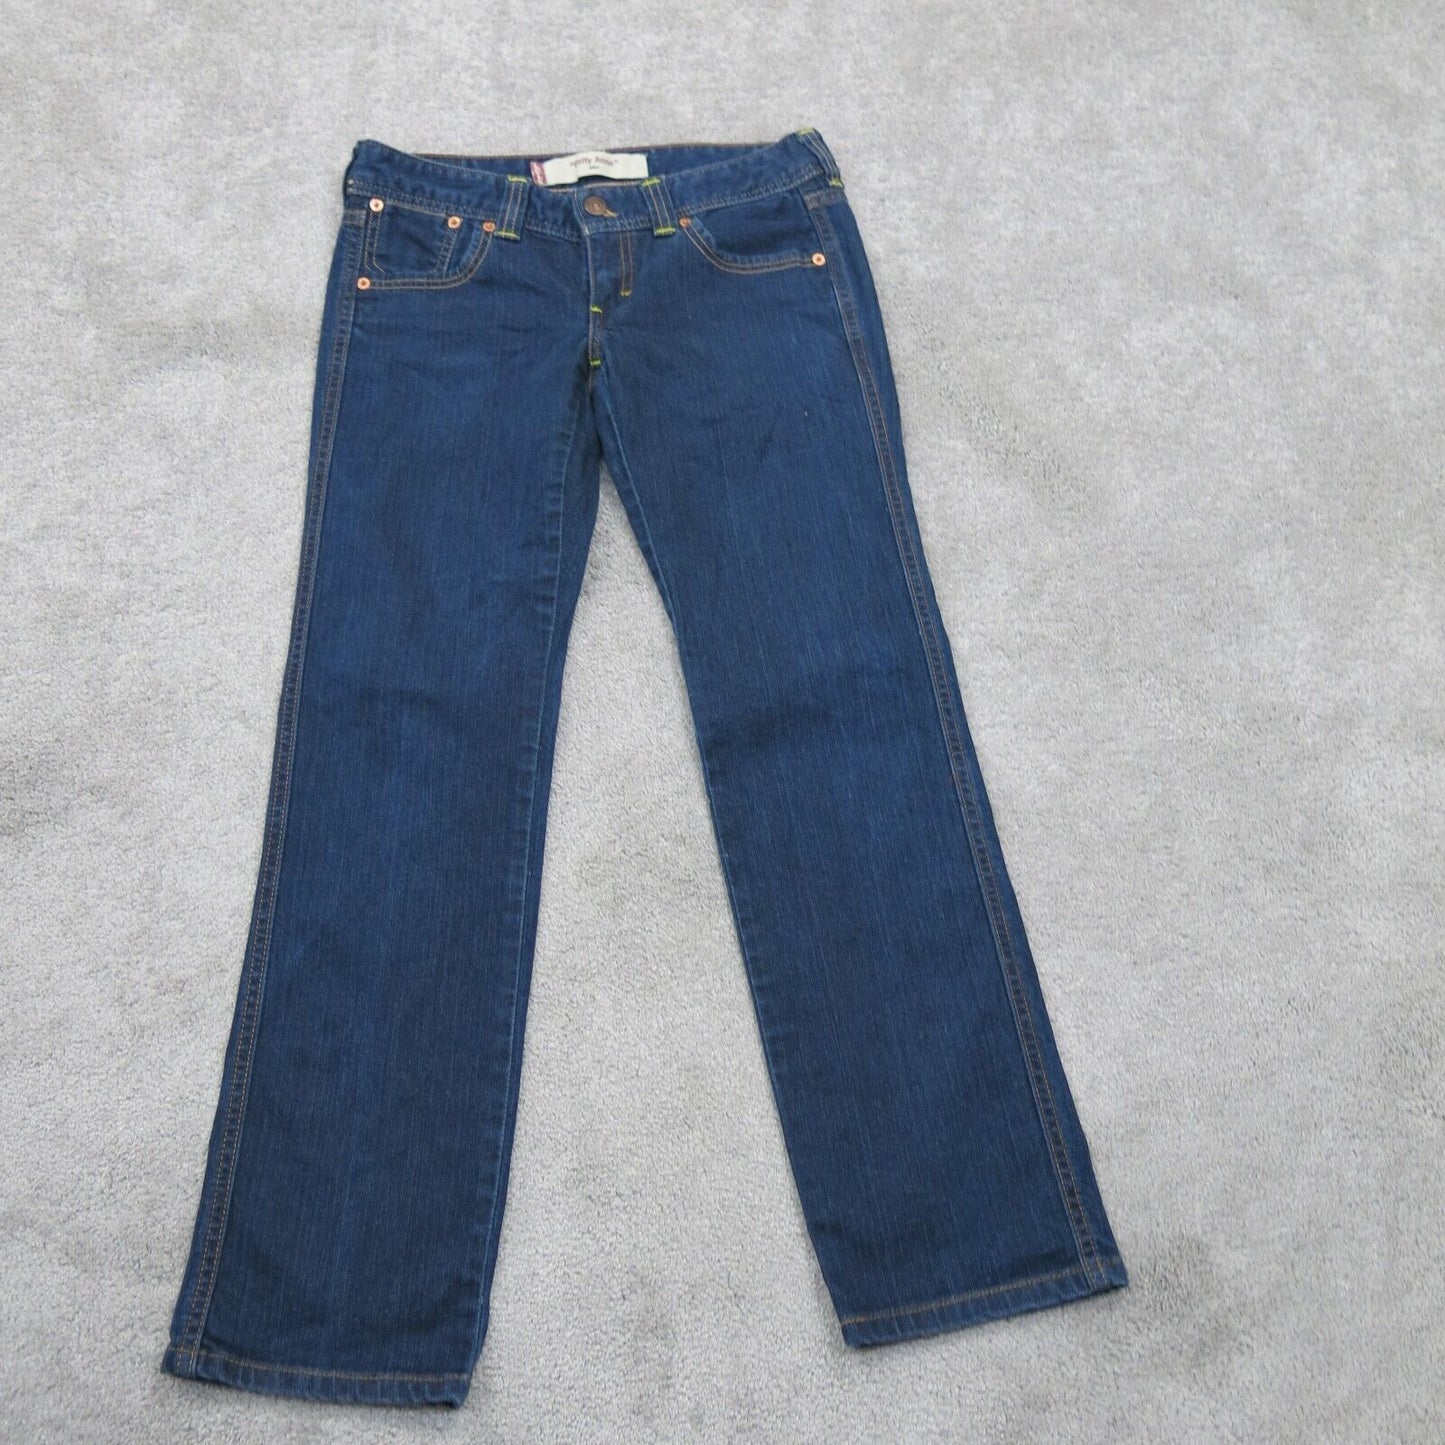 Levis Womens Slim Straight Jeans Denim Stretch Low Rise Blue Size W29 X L30